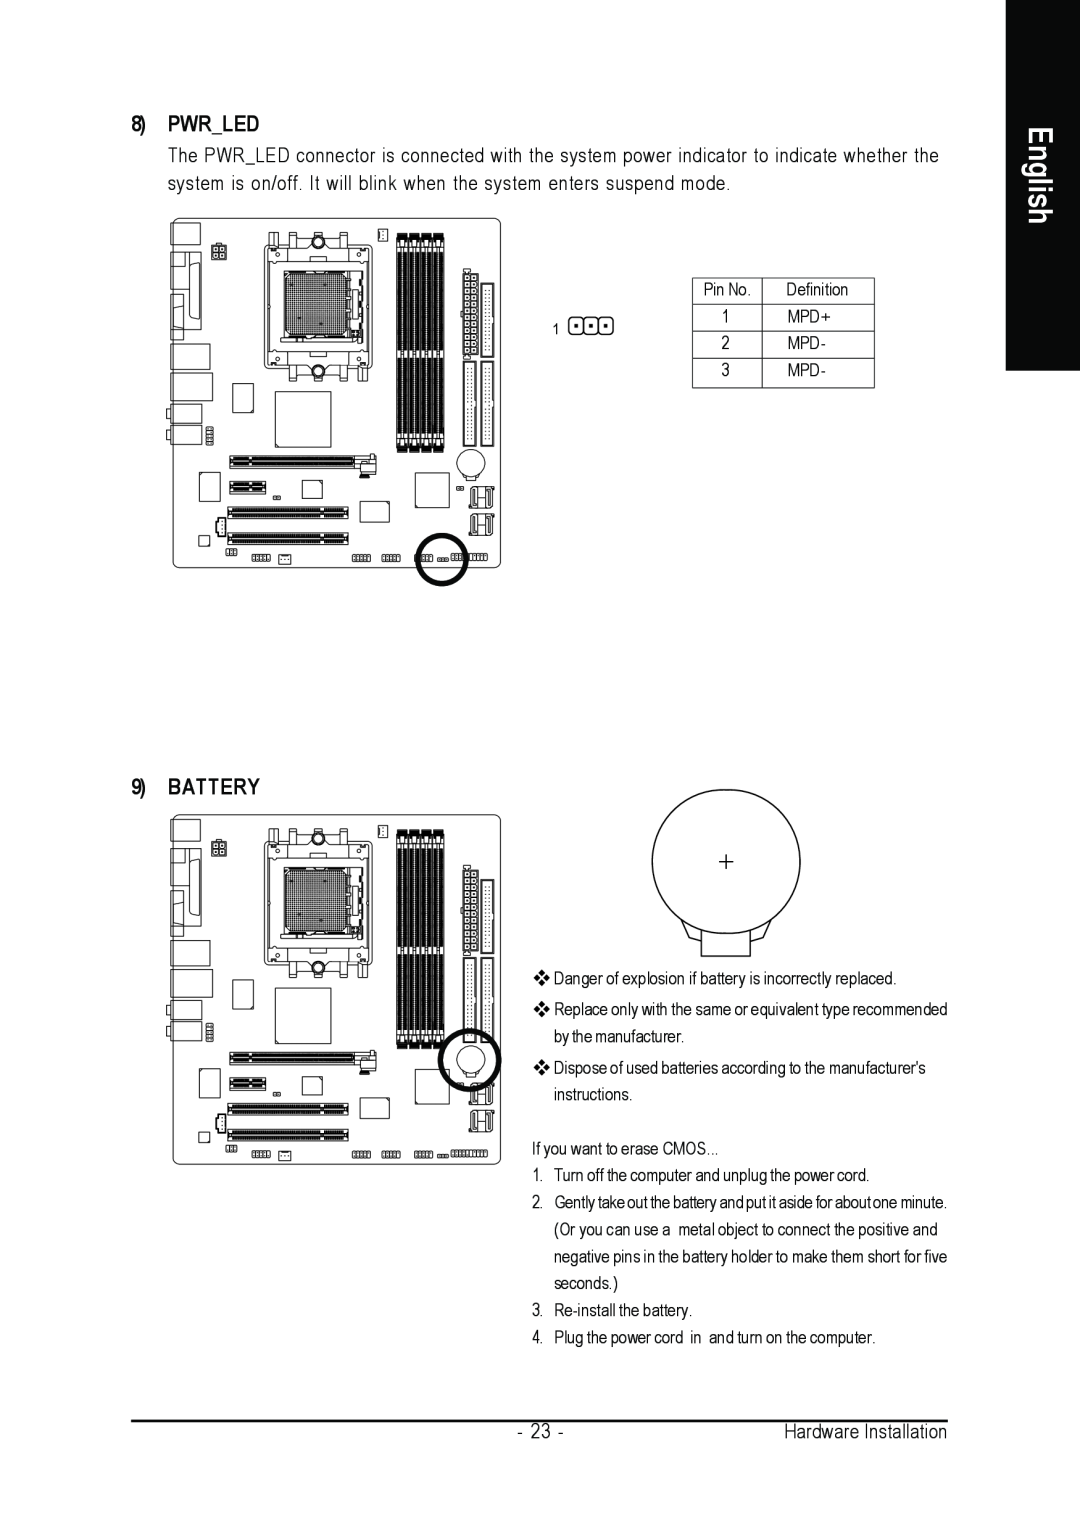 Gigabyte GA-K8N51PVMT-9-RH user manual Pwrled, Battery, English 